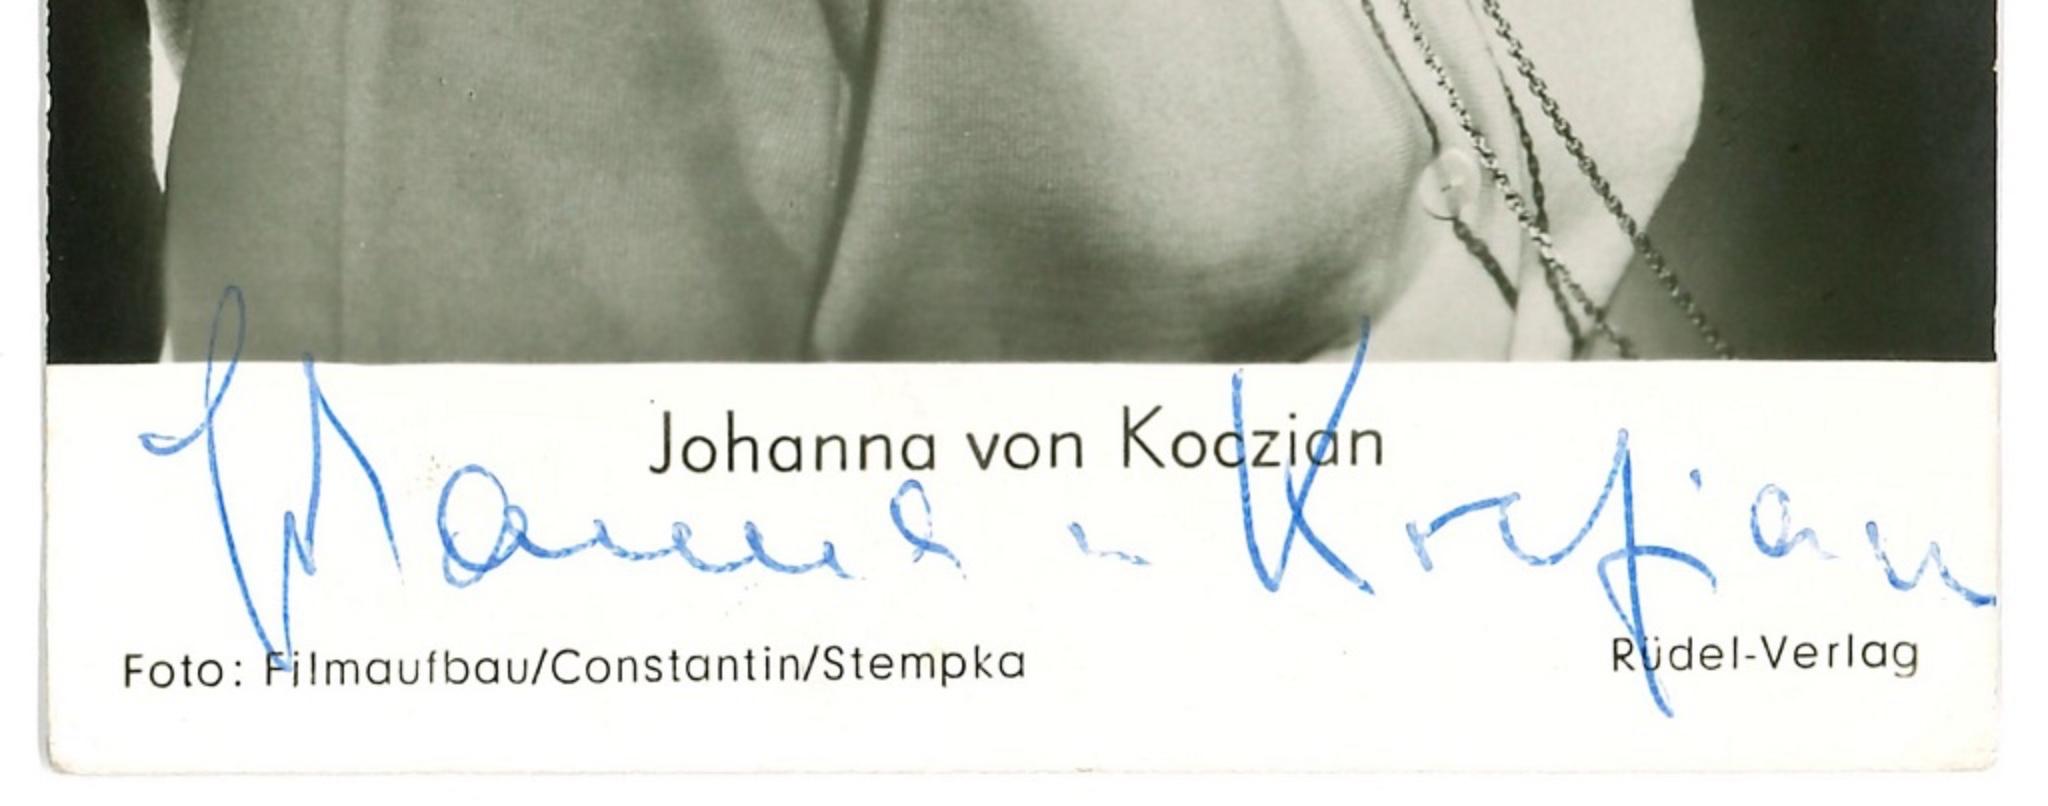  Autographed Portrait of Johanna von Koozian - Vintage b/w Postcard - 1960s - Photograph by Unknown